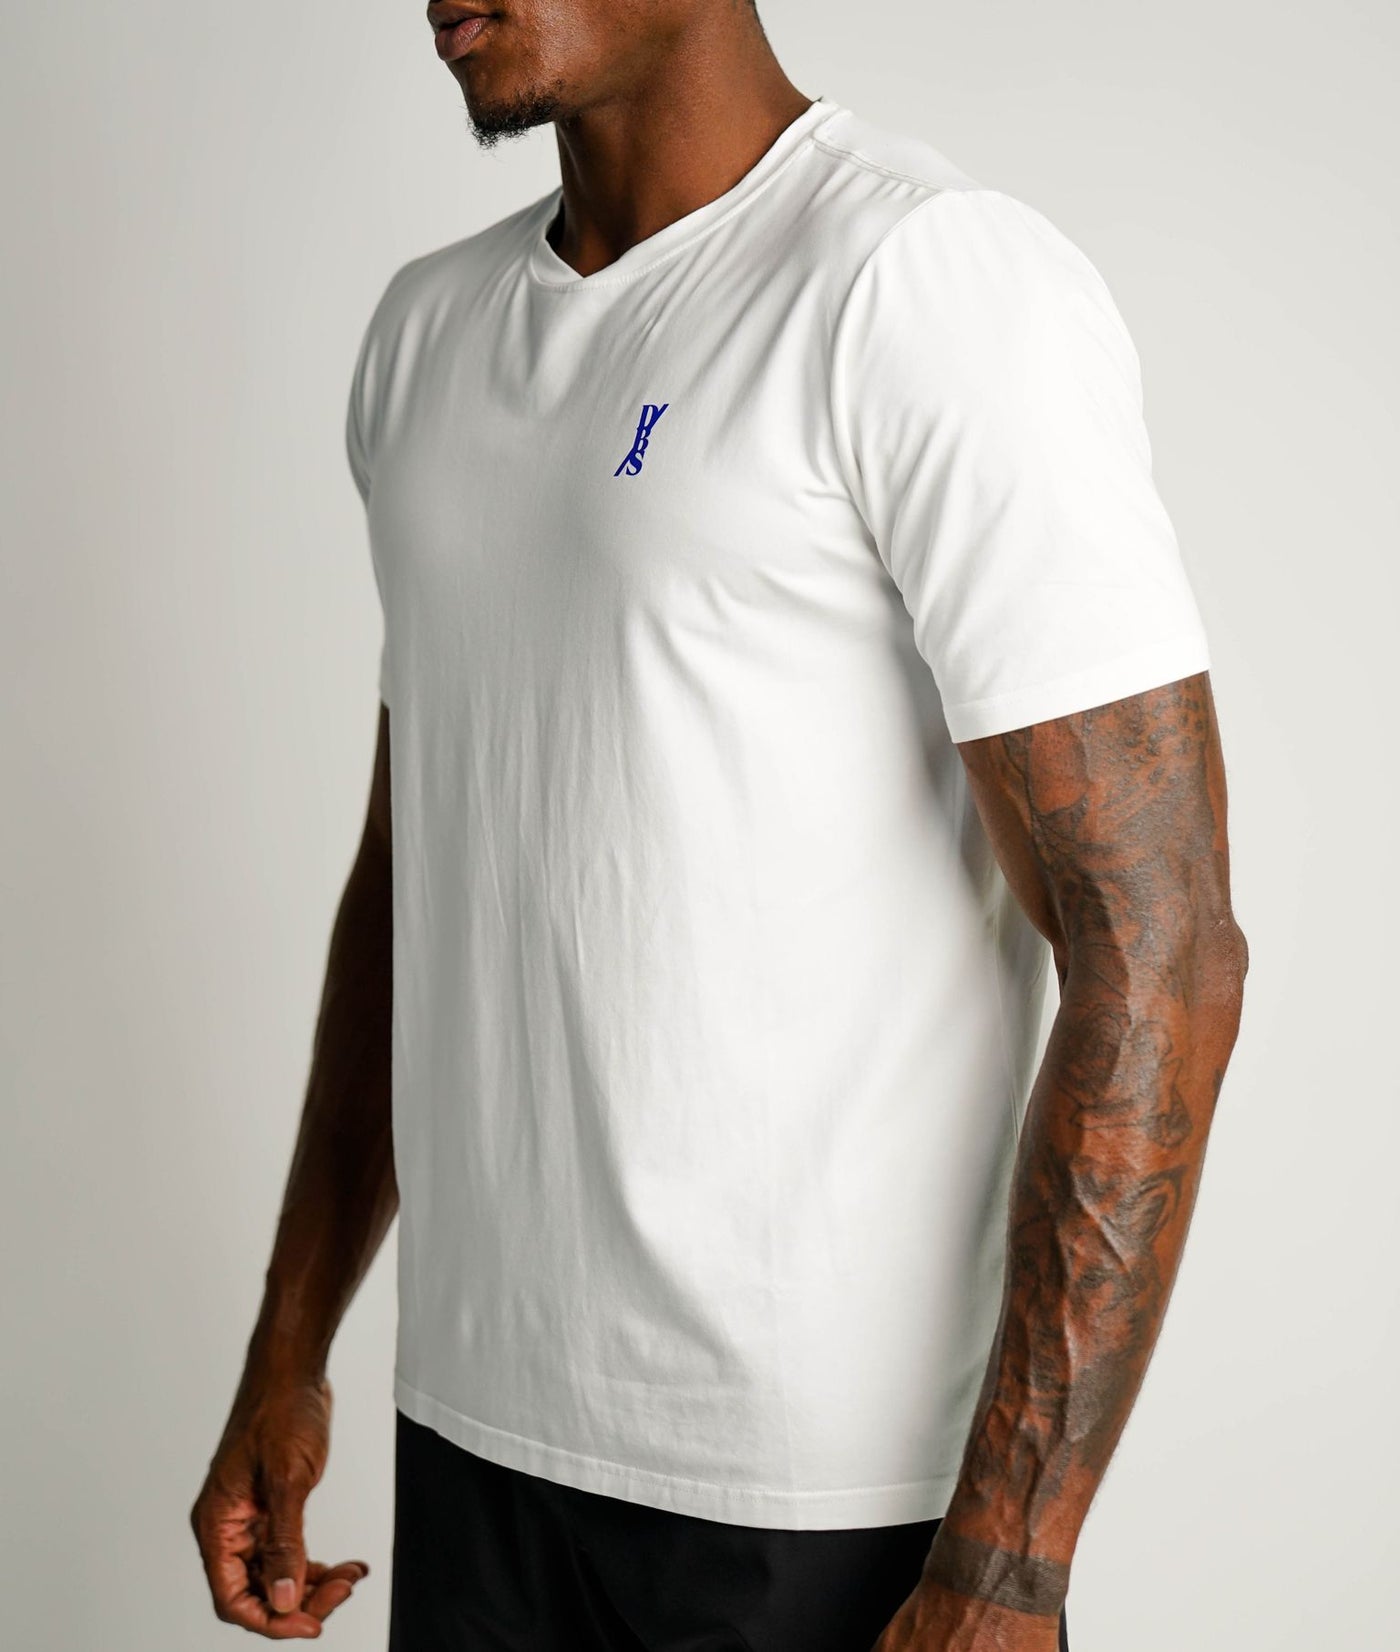 Men's T Shirt - White